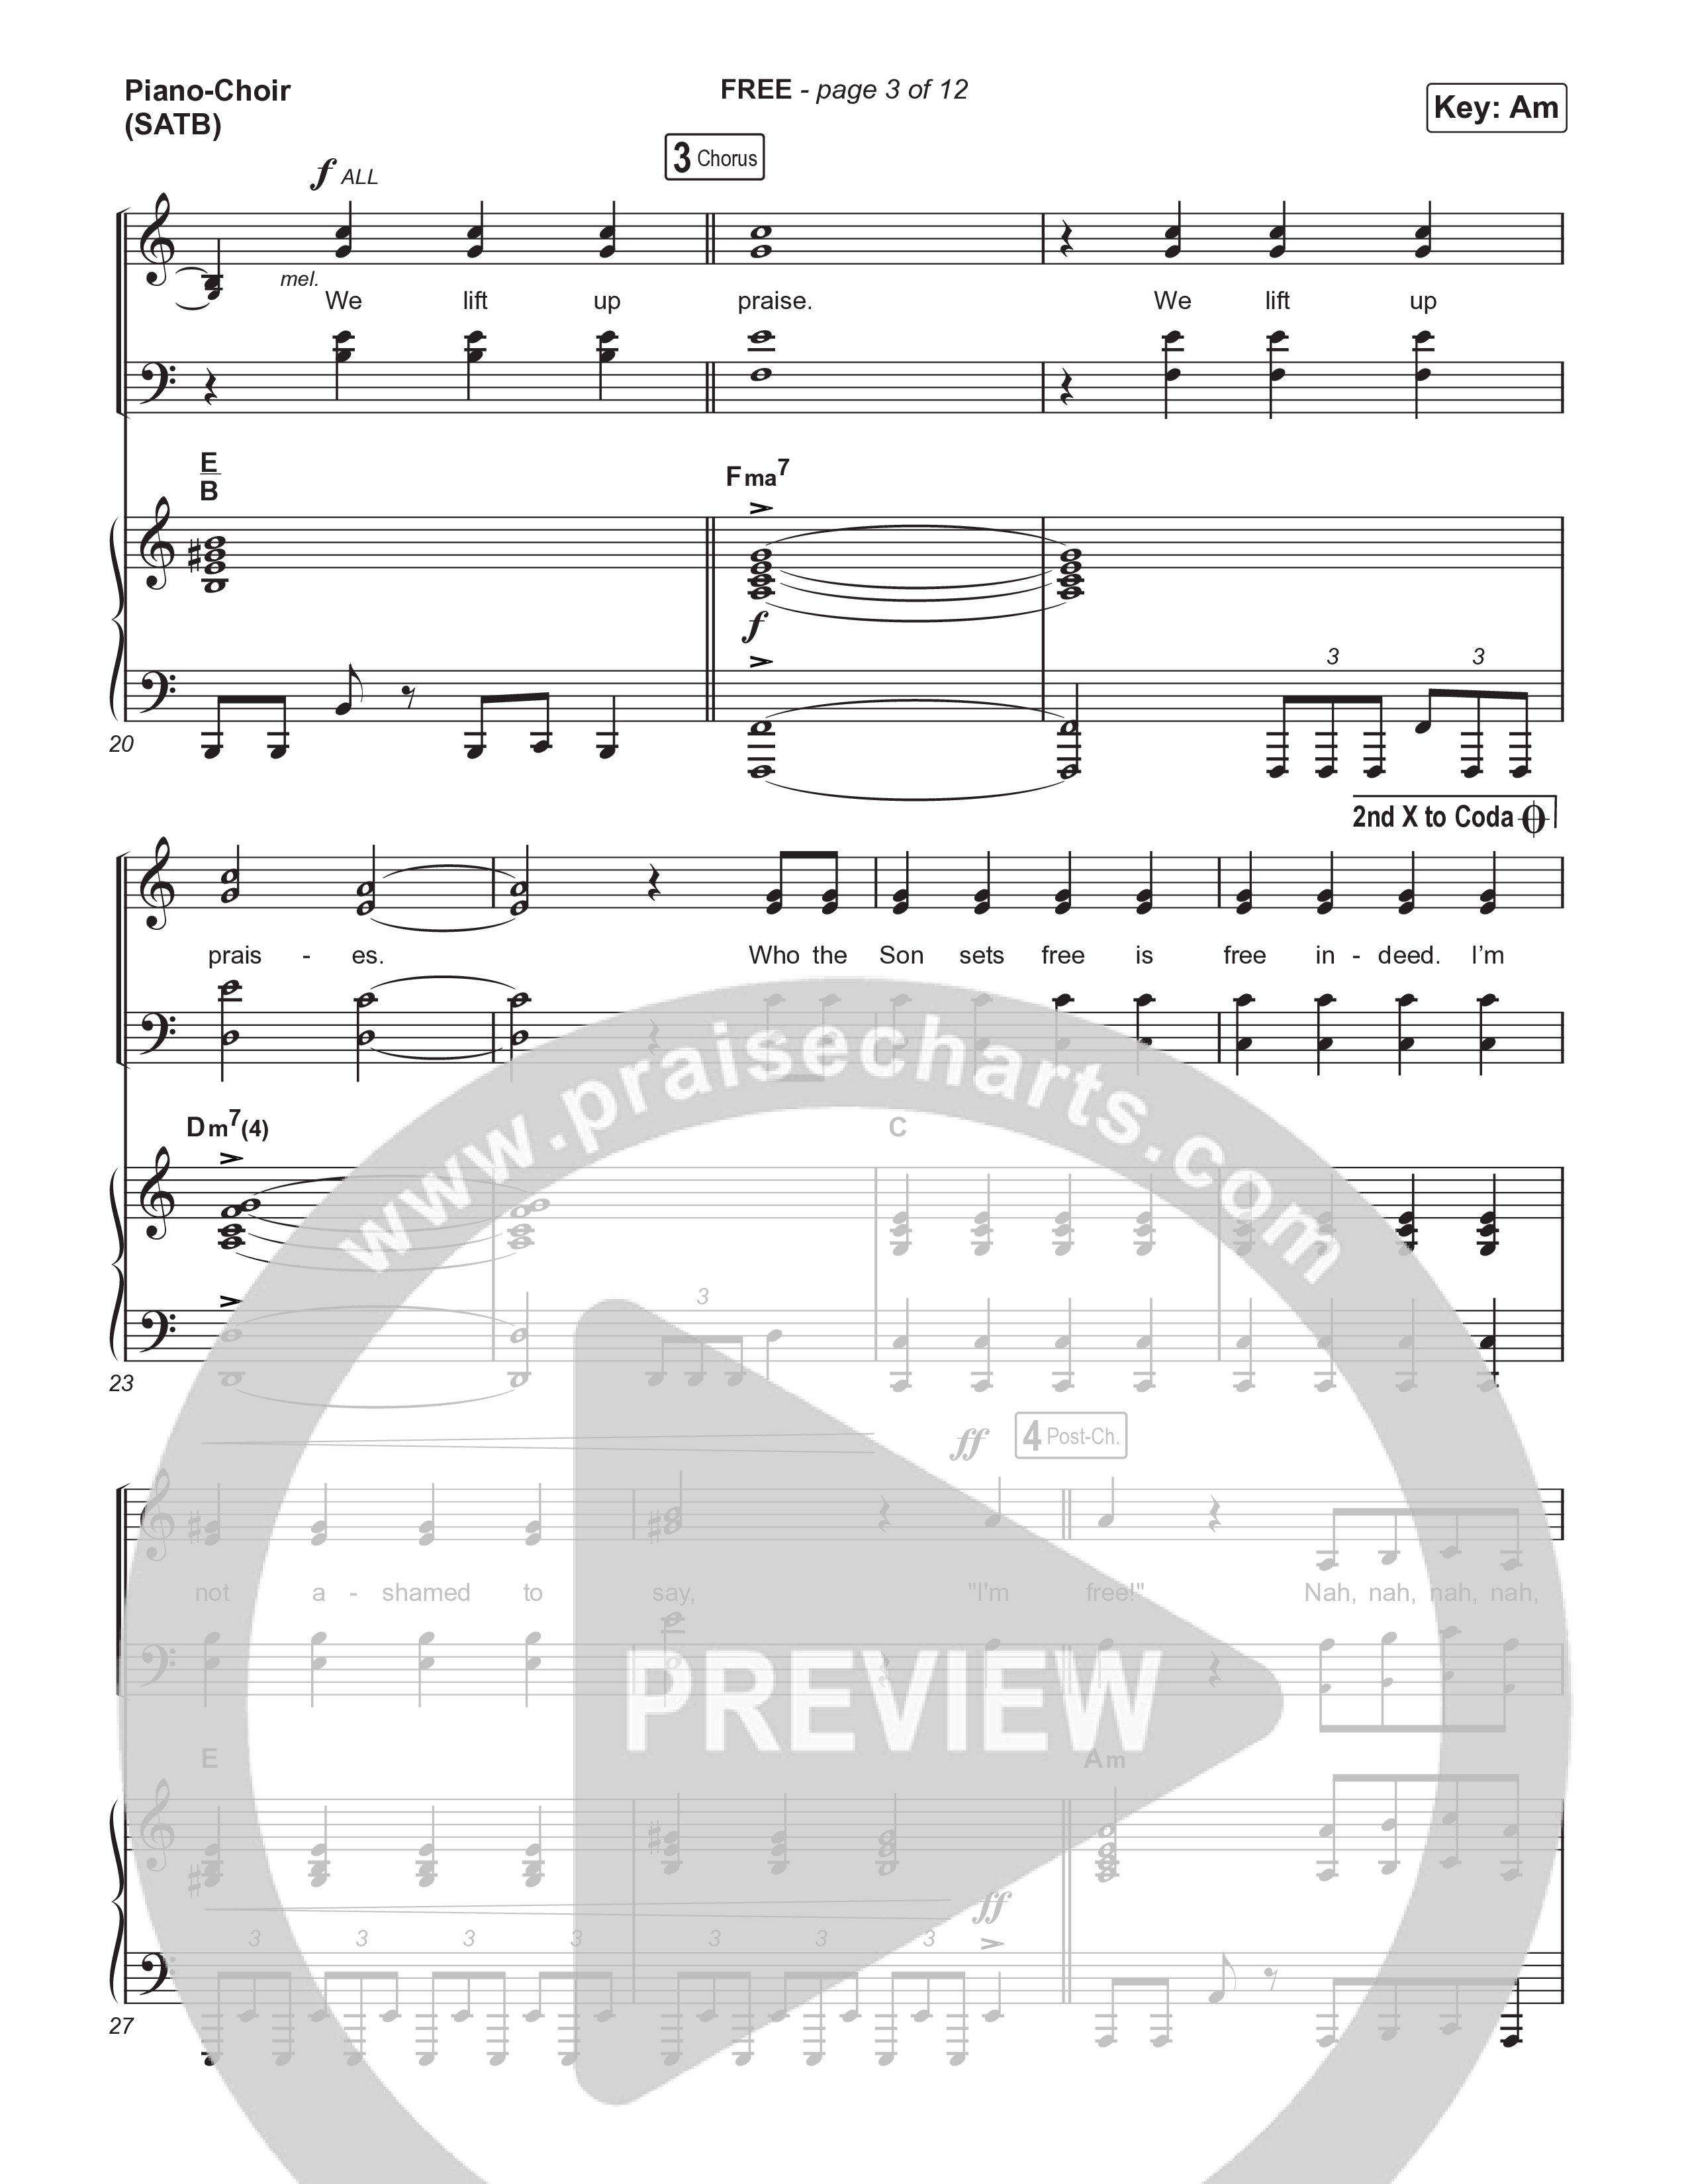 FREE Piano/Vocal (SATB) (SEU Worship)